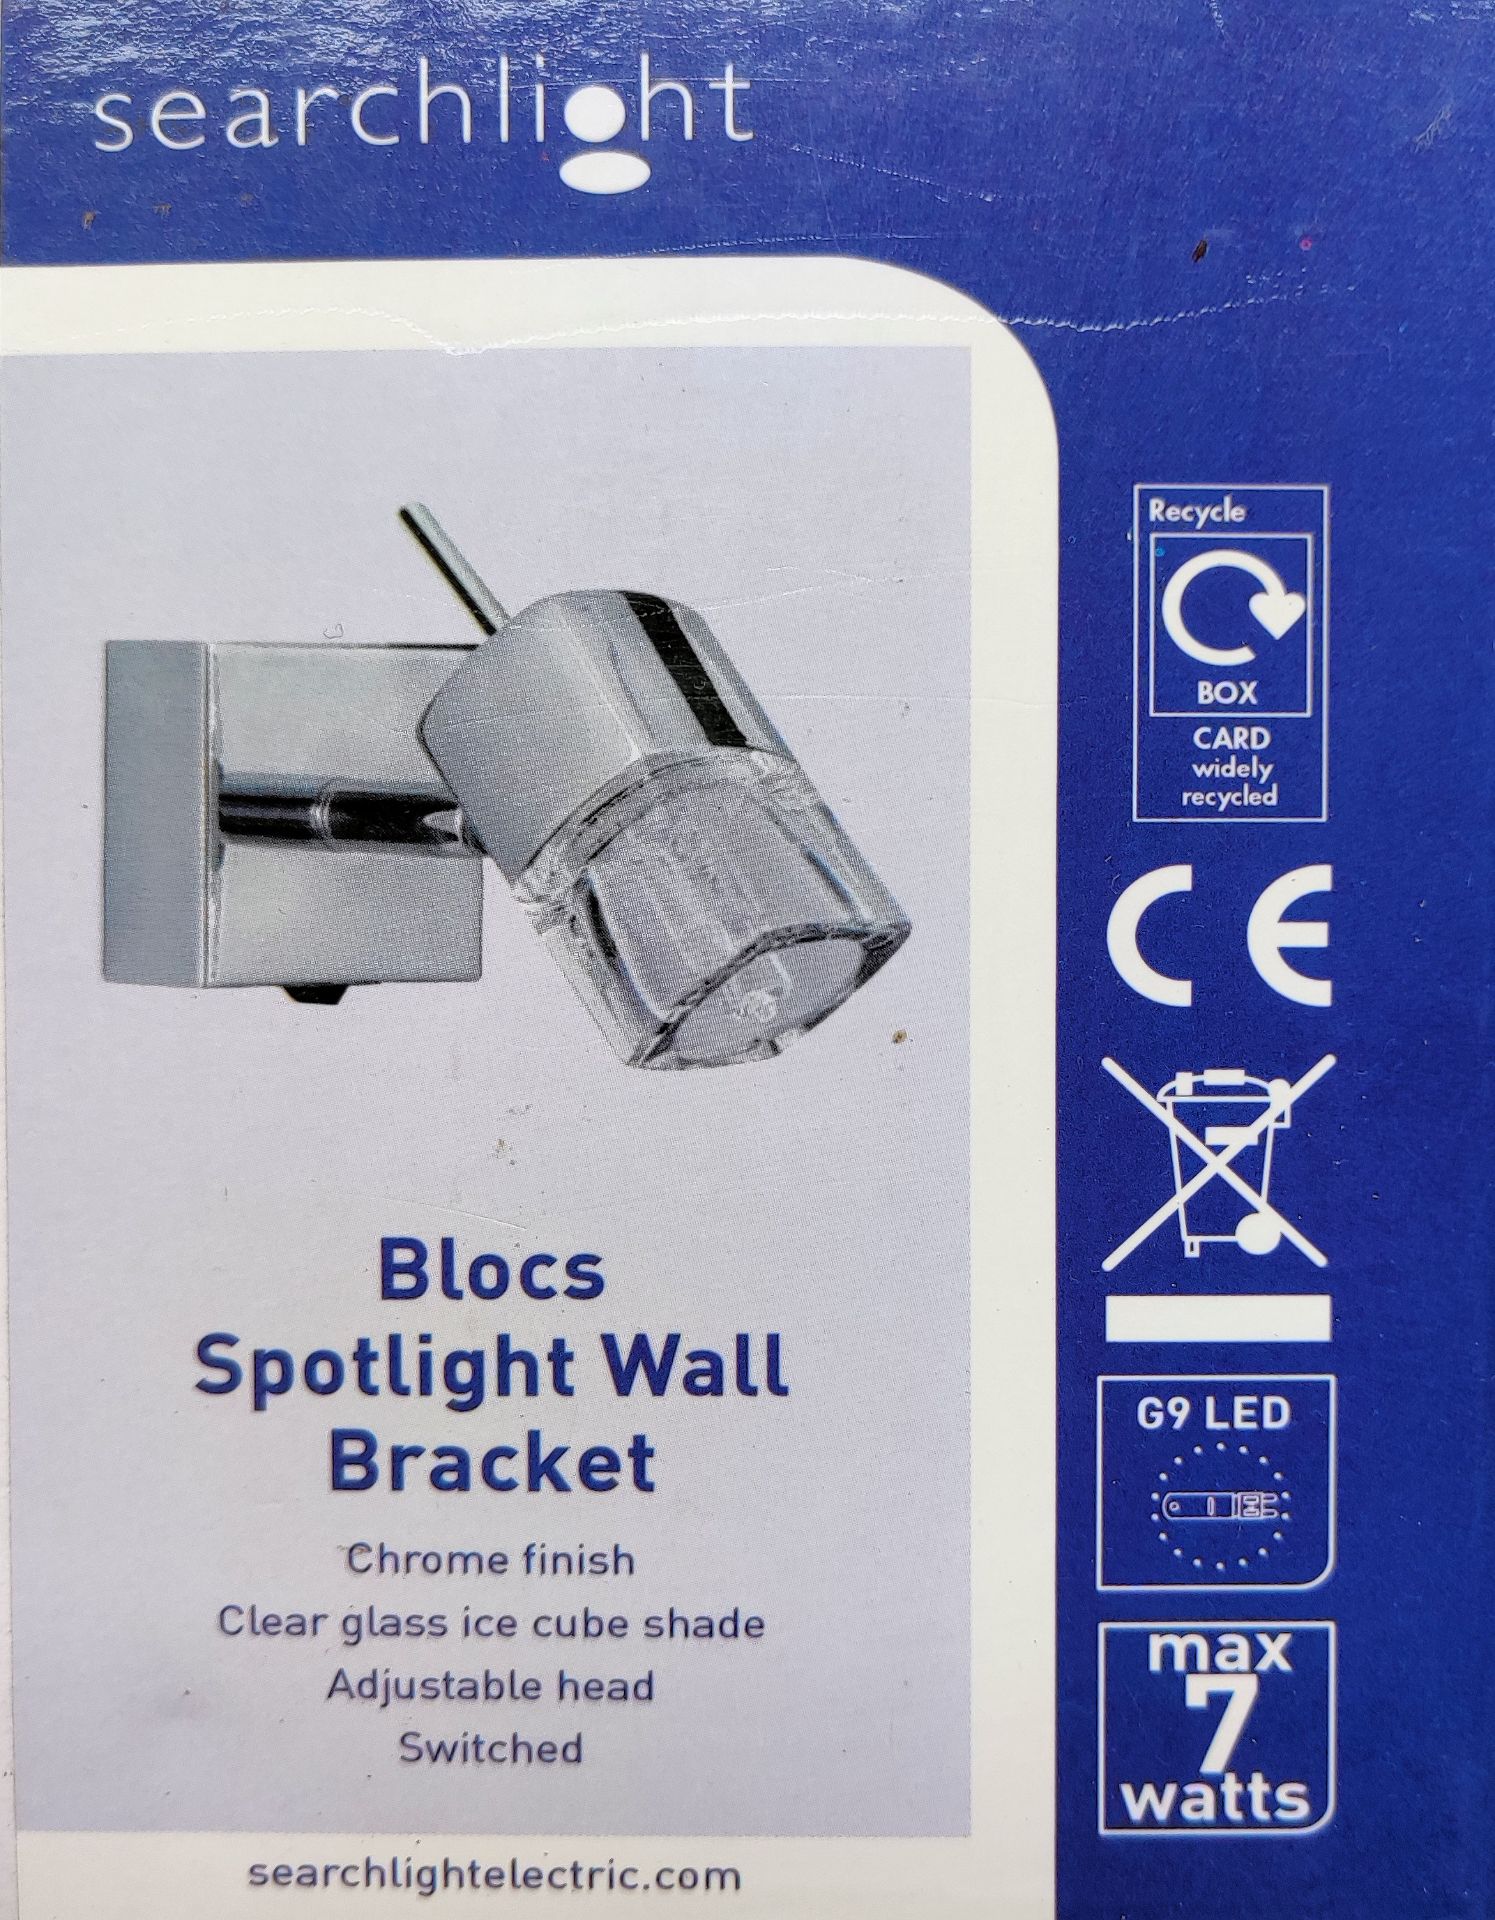 2 x Searchlight Blocs Spotlight Wall Bracket - Chrome Finish, Clear Glass Ice Cube Shade - New Boxed